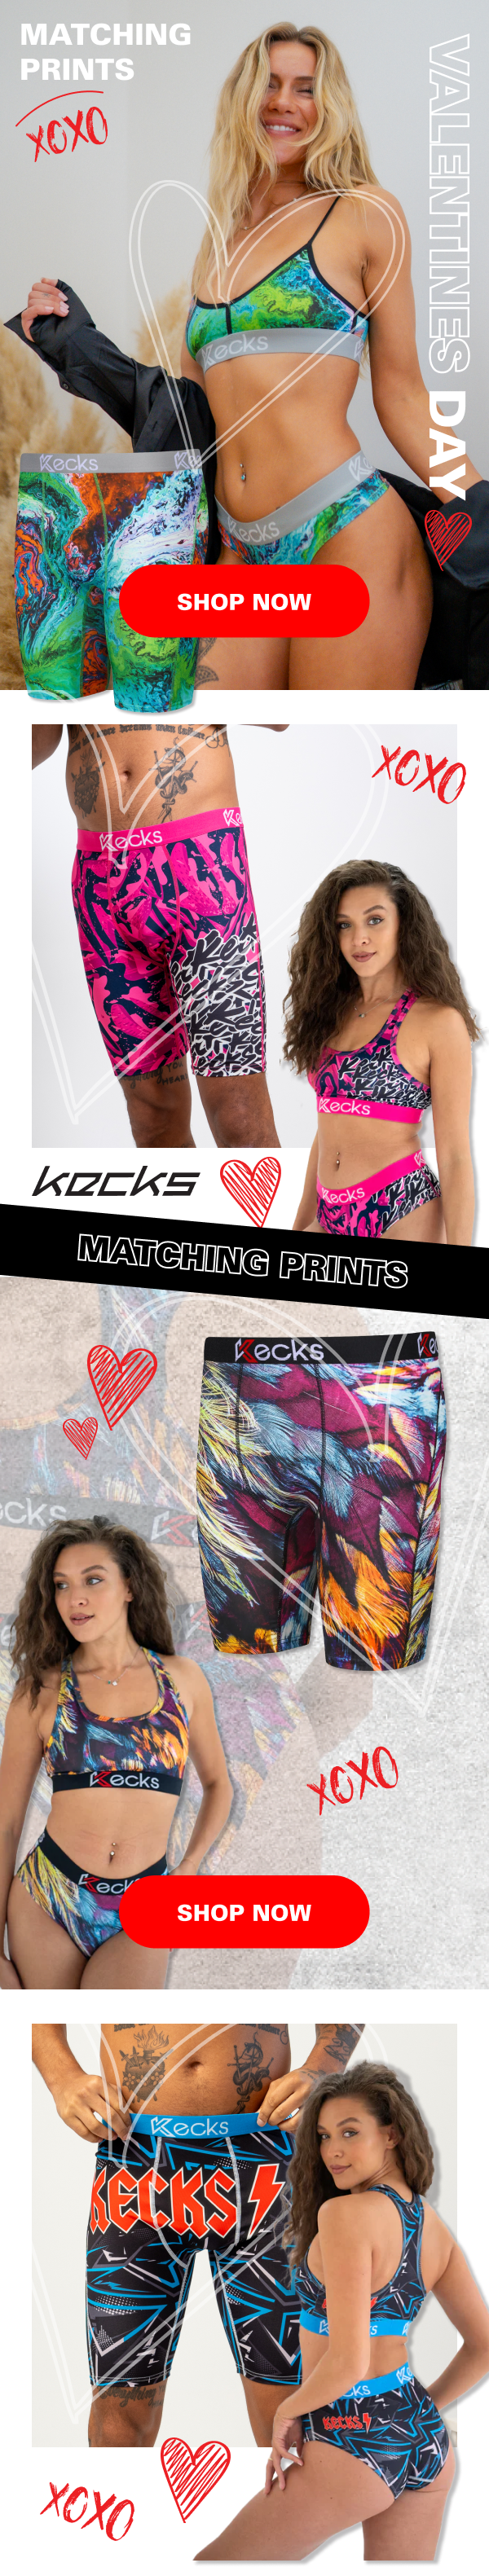 Kecks, Exclusive Access: Bouquet Underwear Prints Just for You